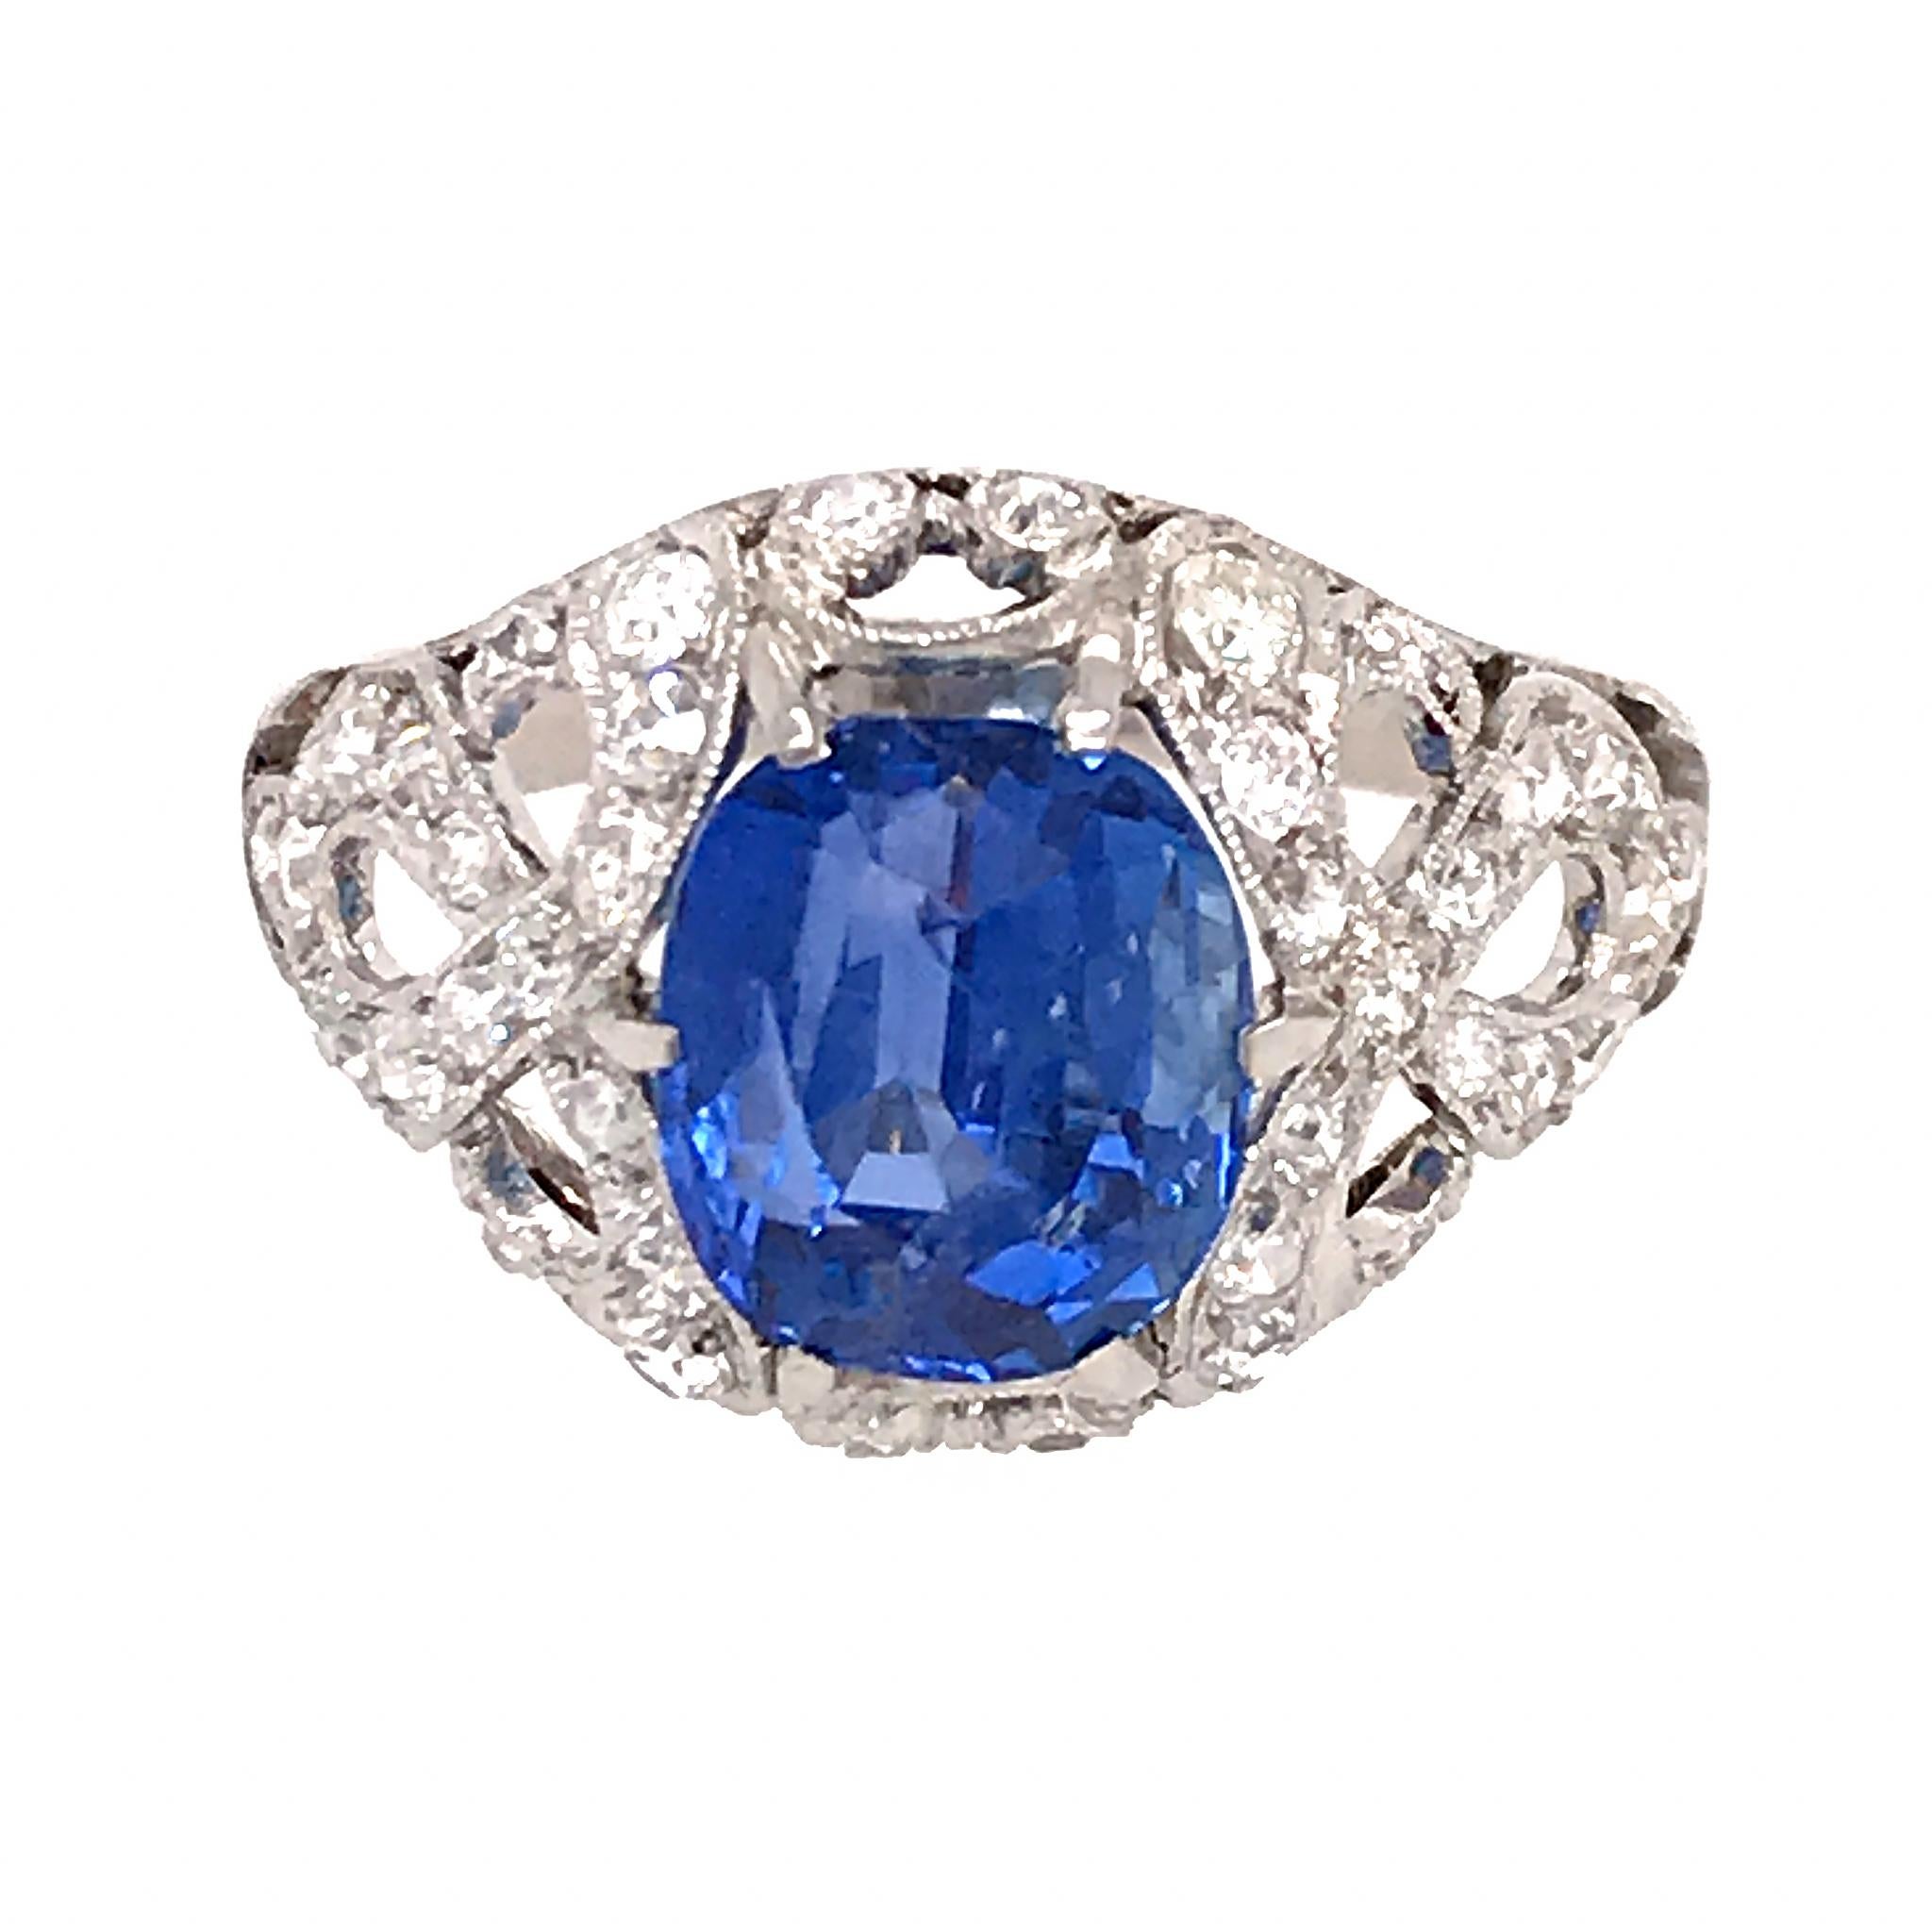 Platinum
Sapphire: 3.55 ct TW
GIA Report Number: 6203700180
Sapphire Cut: Oval - Brilliant Cut
Color: Blue - No heat
Origin:  Sri Lanka
Diamond: 0.60 ct twd
Ring Size: 5